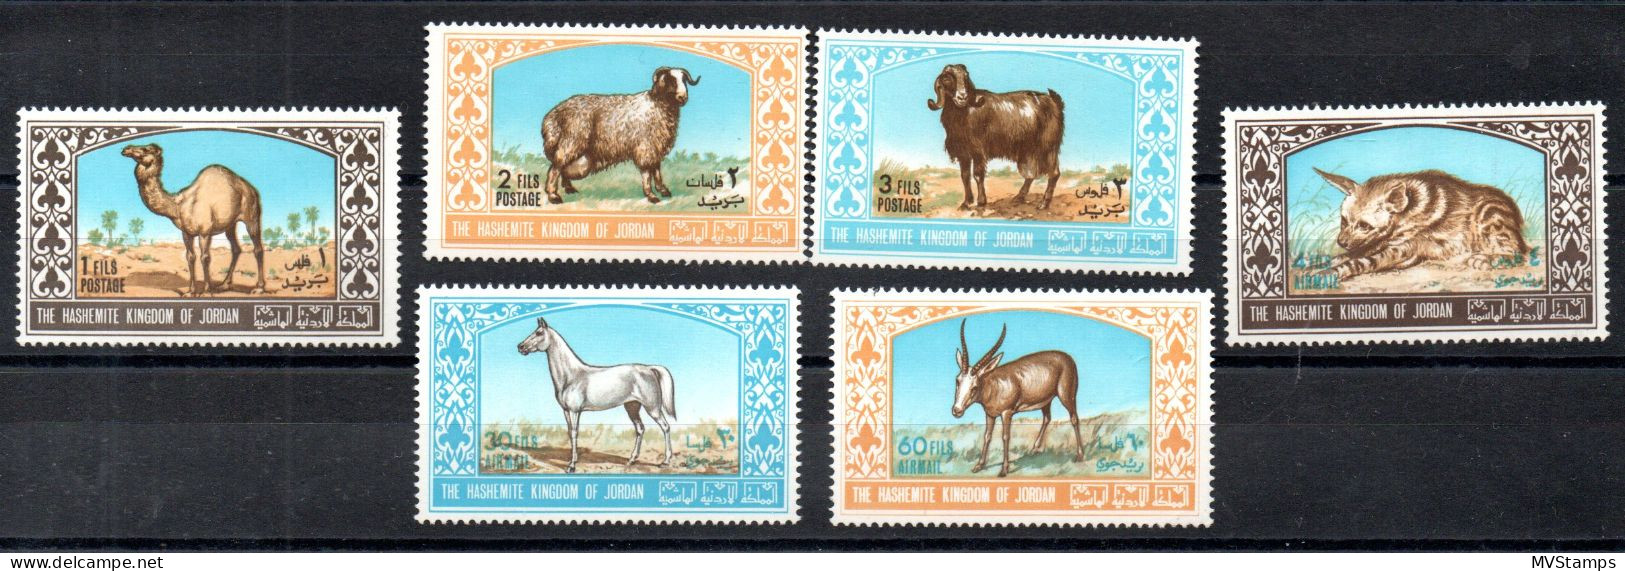 Jordan 1967 Set Animals/Tiere Stamps (Michel 669/74) Nice MNH - Jordania